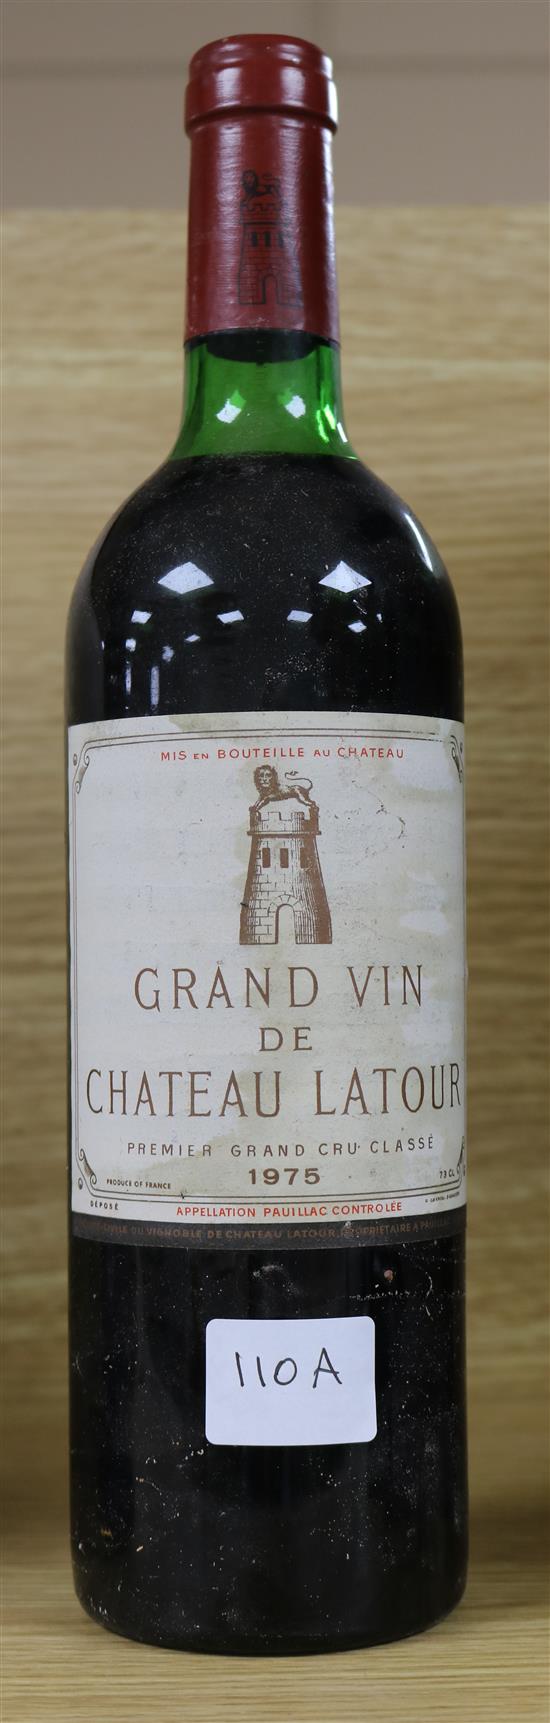 A bottle of Chateau Latour 1975